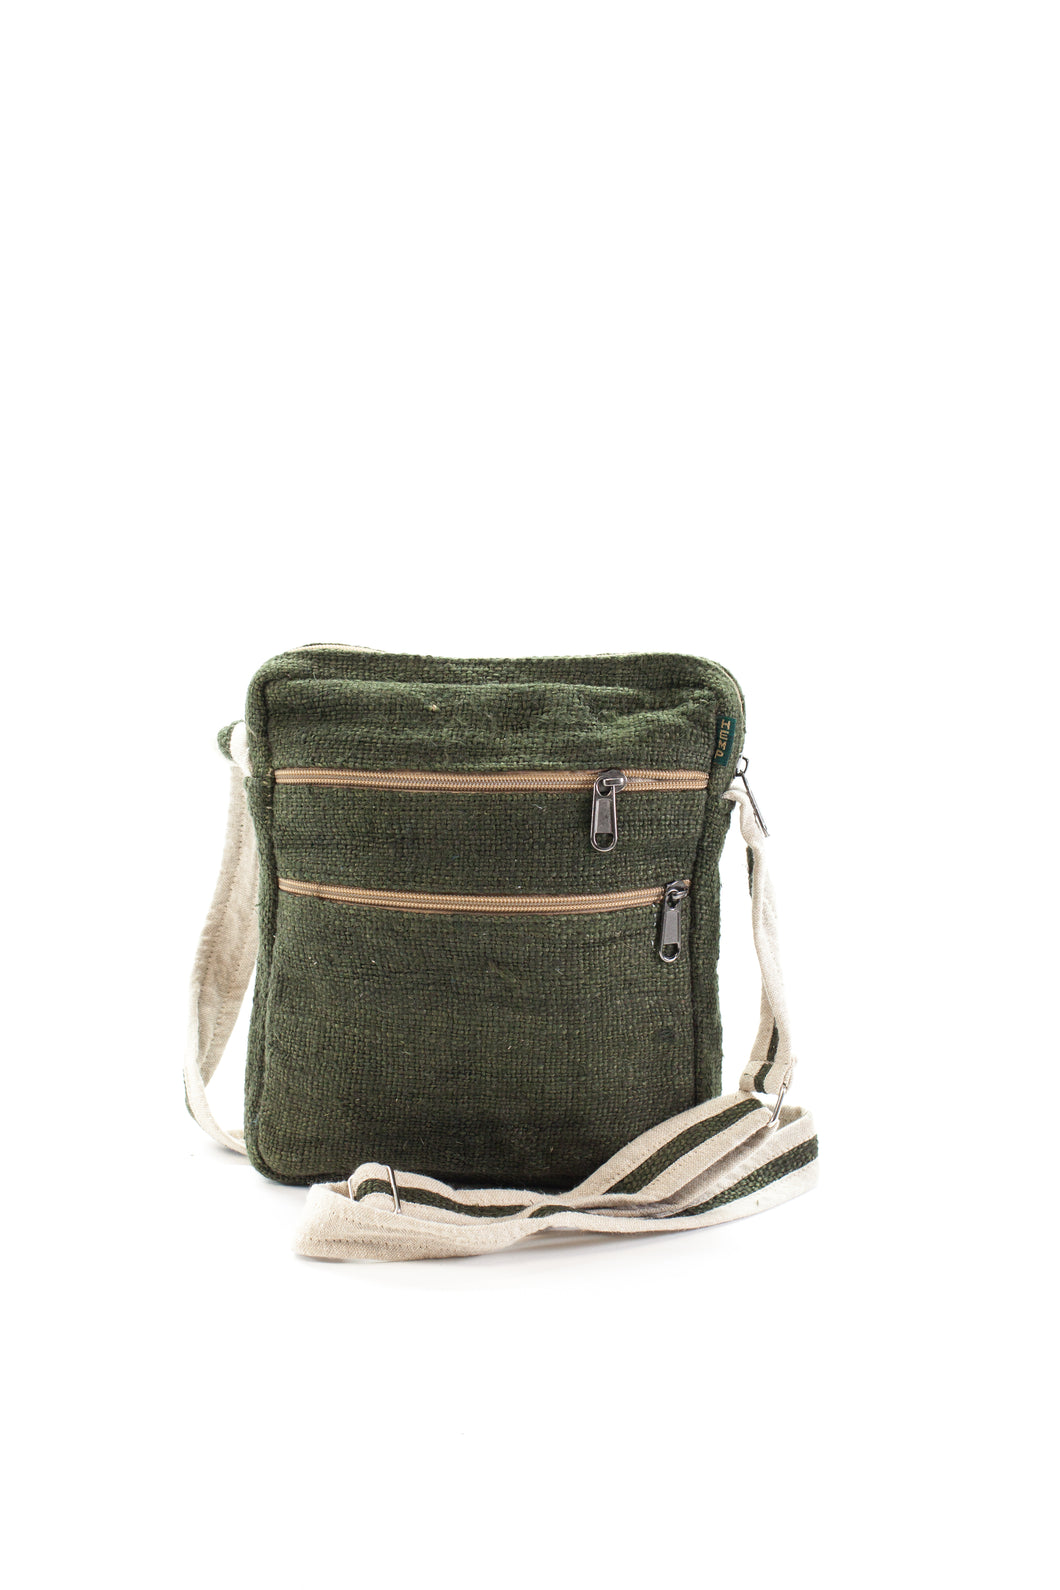 Handmade 100% Pure Hemp Cross Carry Bag - Green - HMPHBCC3